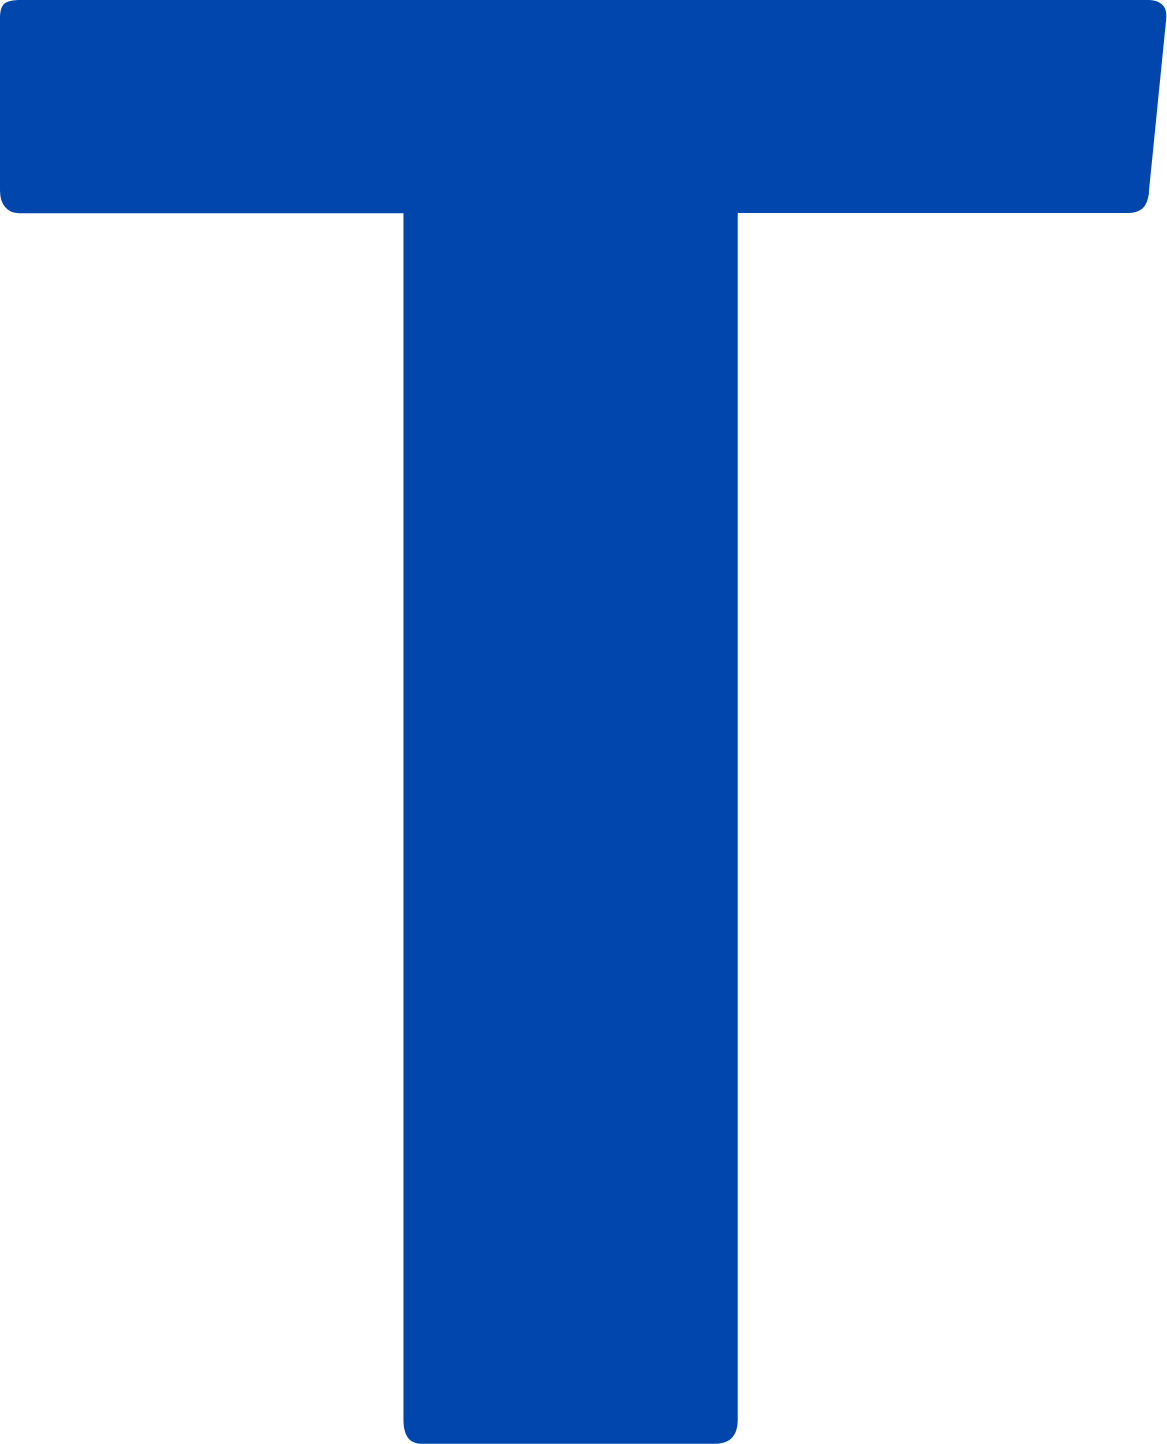 Terveystalo logo (transparent PNG)